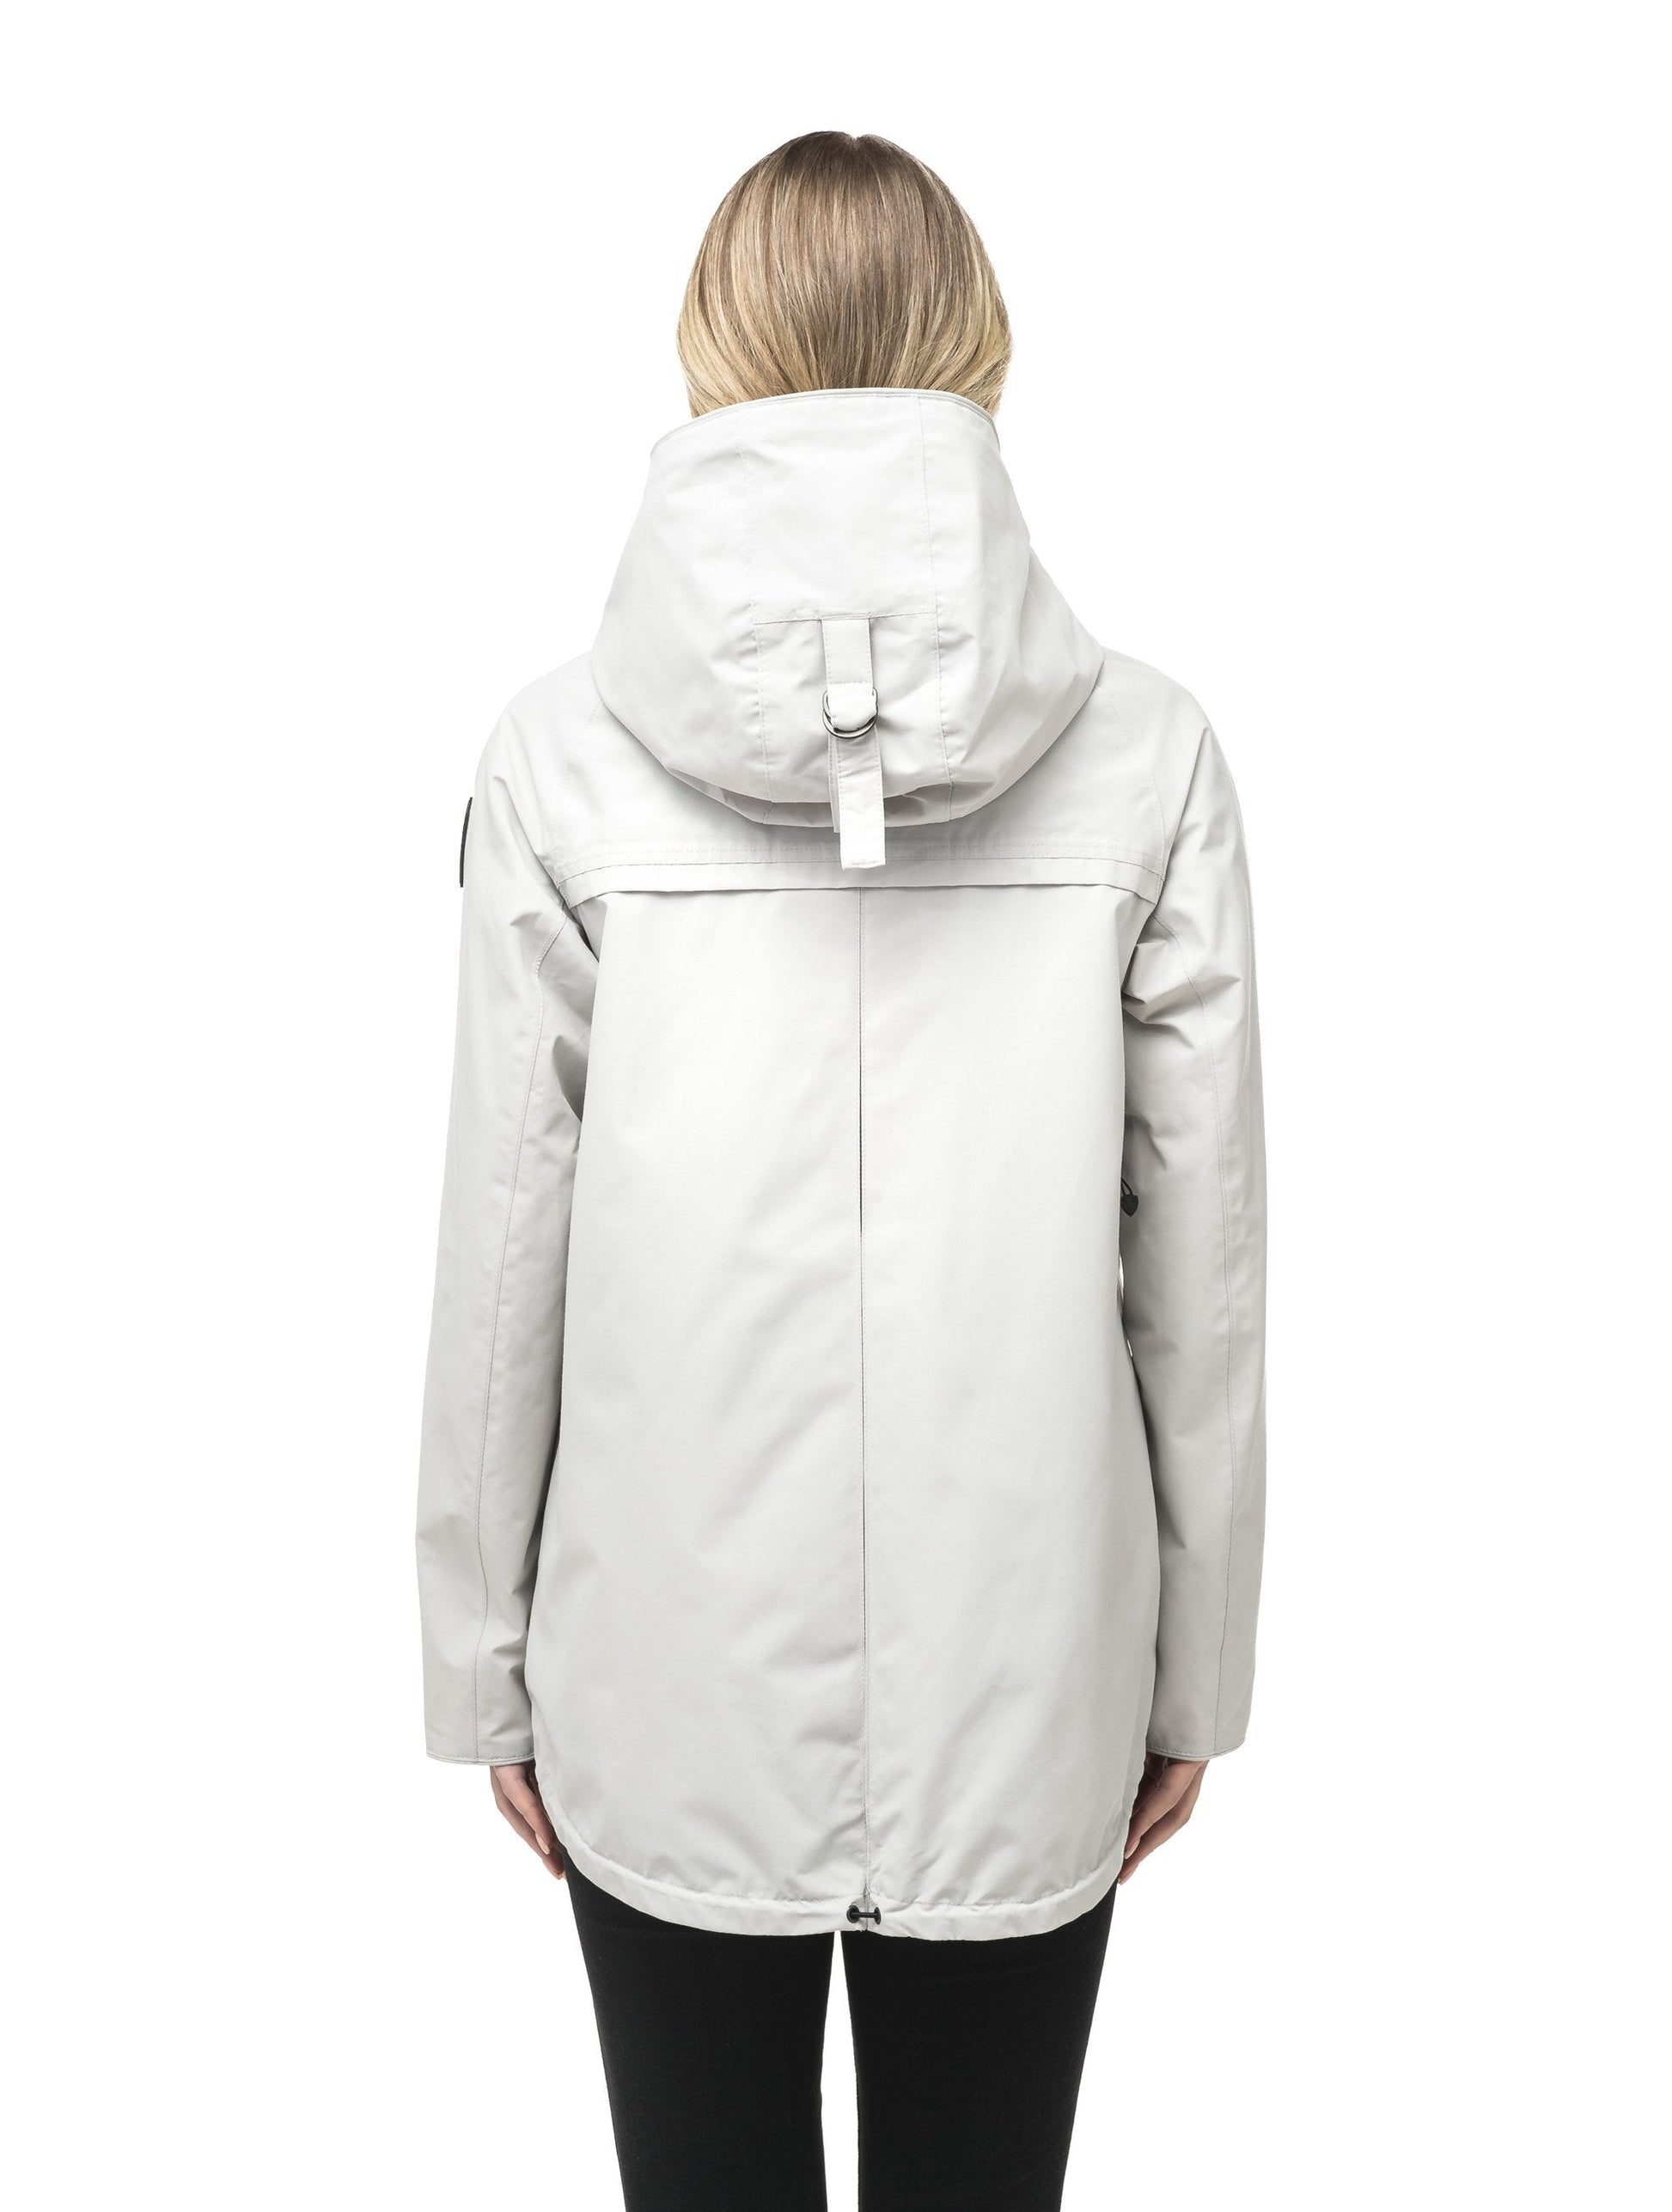 Women's hooded rain jacket with high low hem in Light Grey